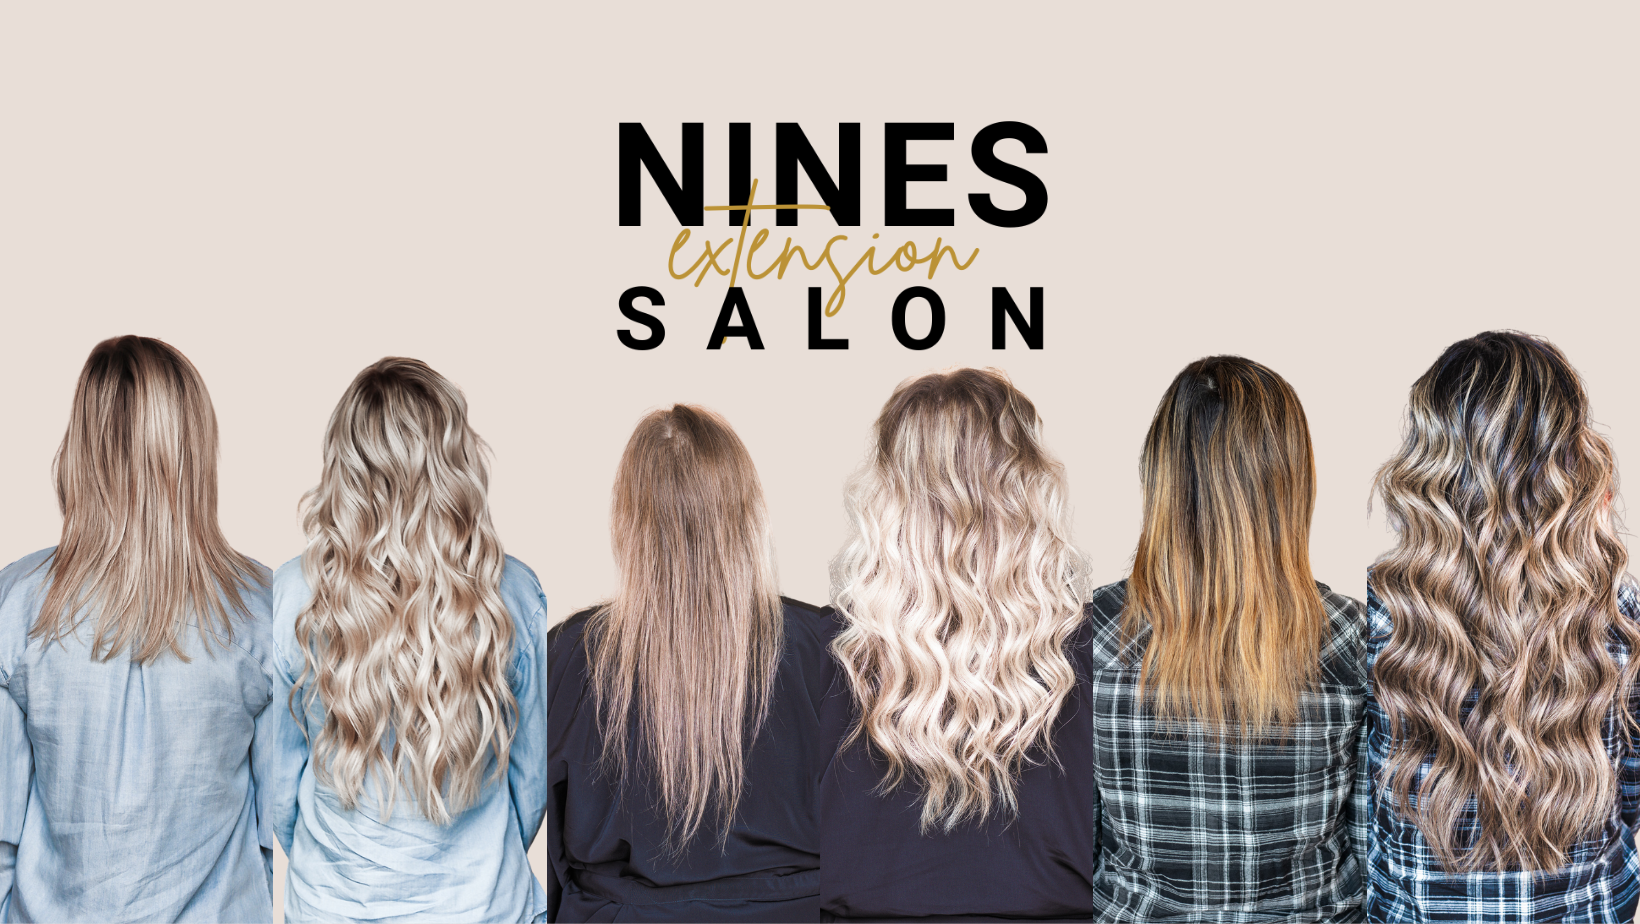 The Nines Salon